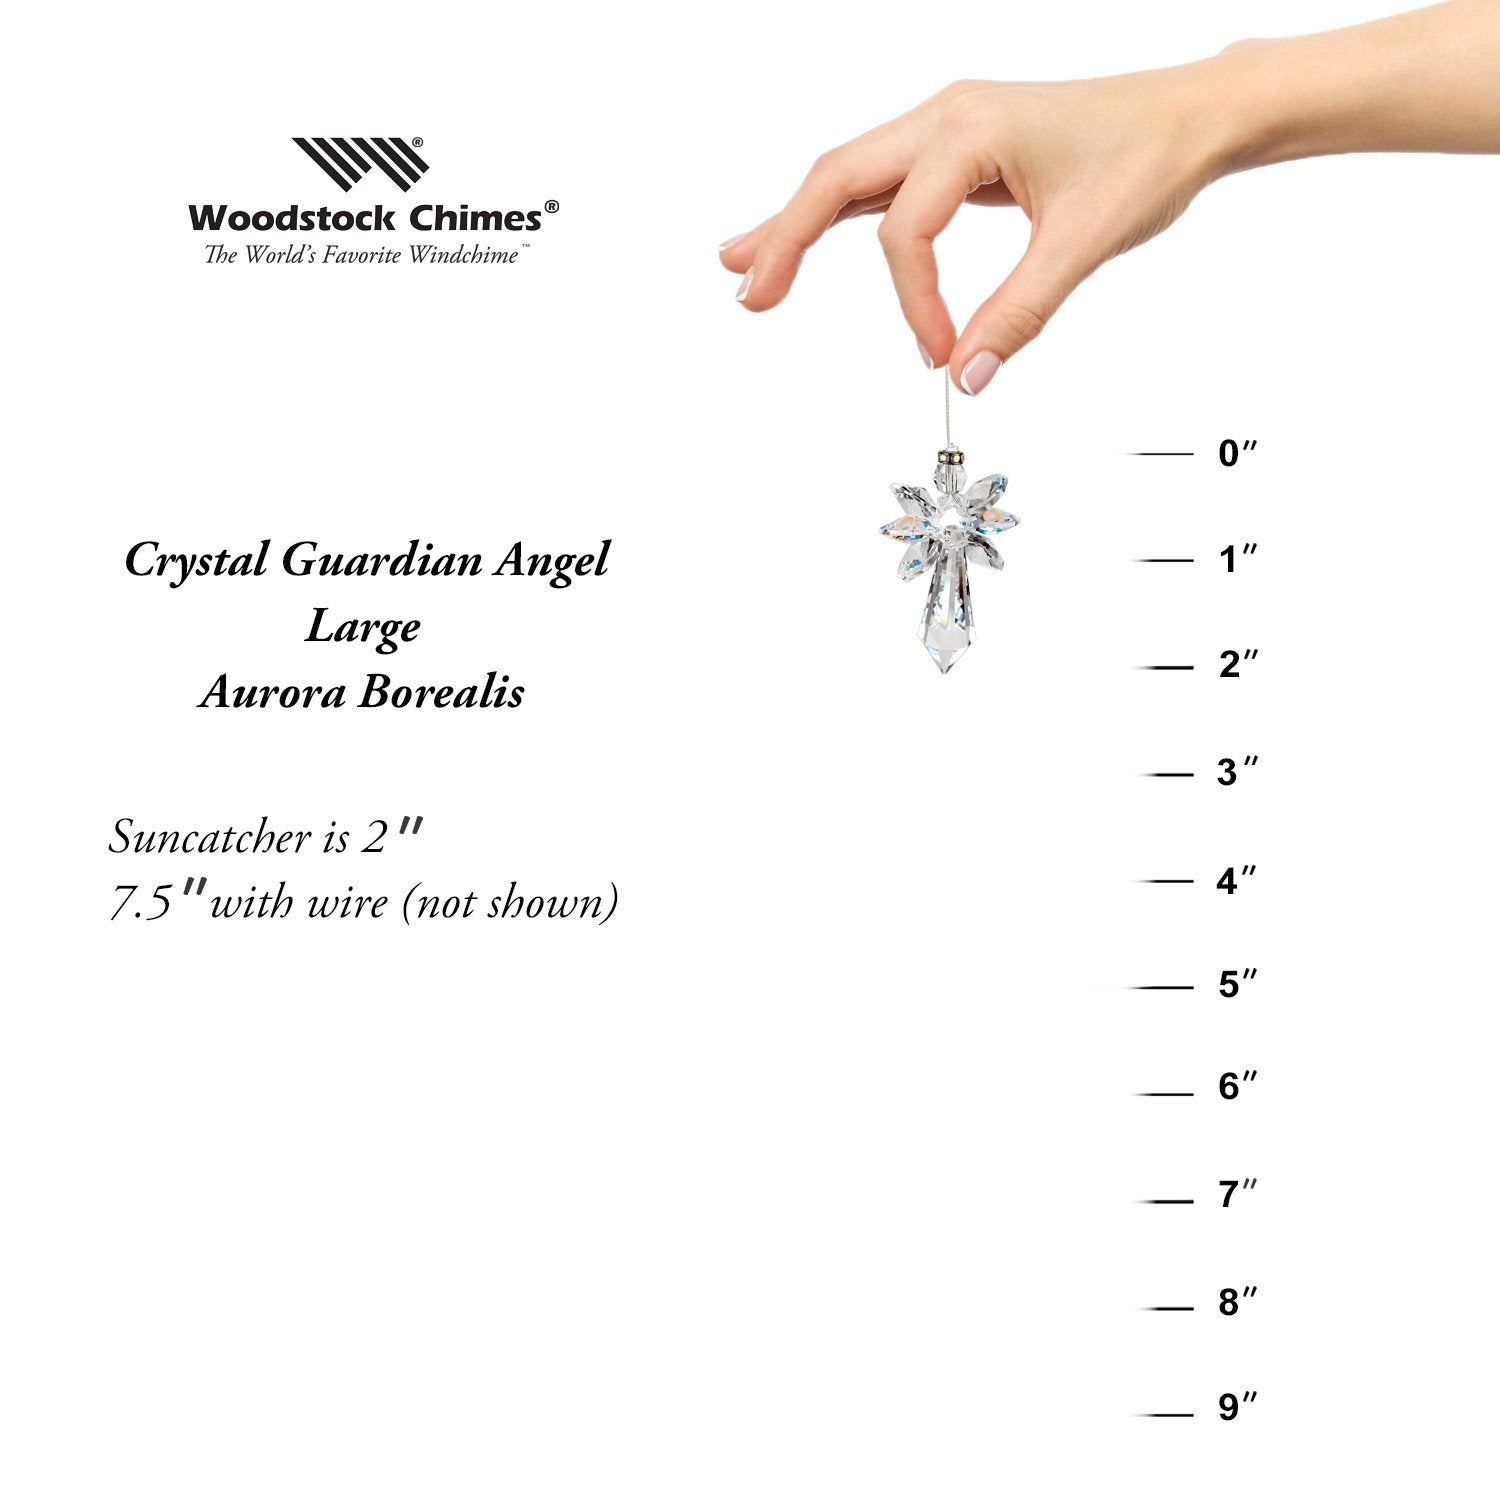 Crystal Guardian Angel Suncatcher - Large, Aurora Borealis proportion image